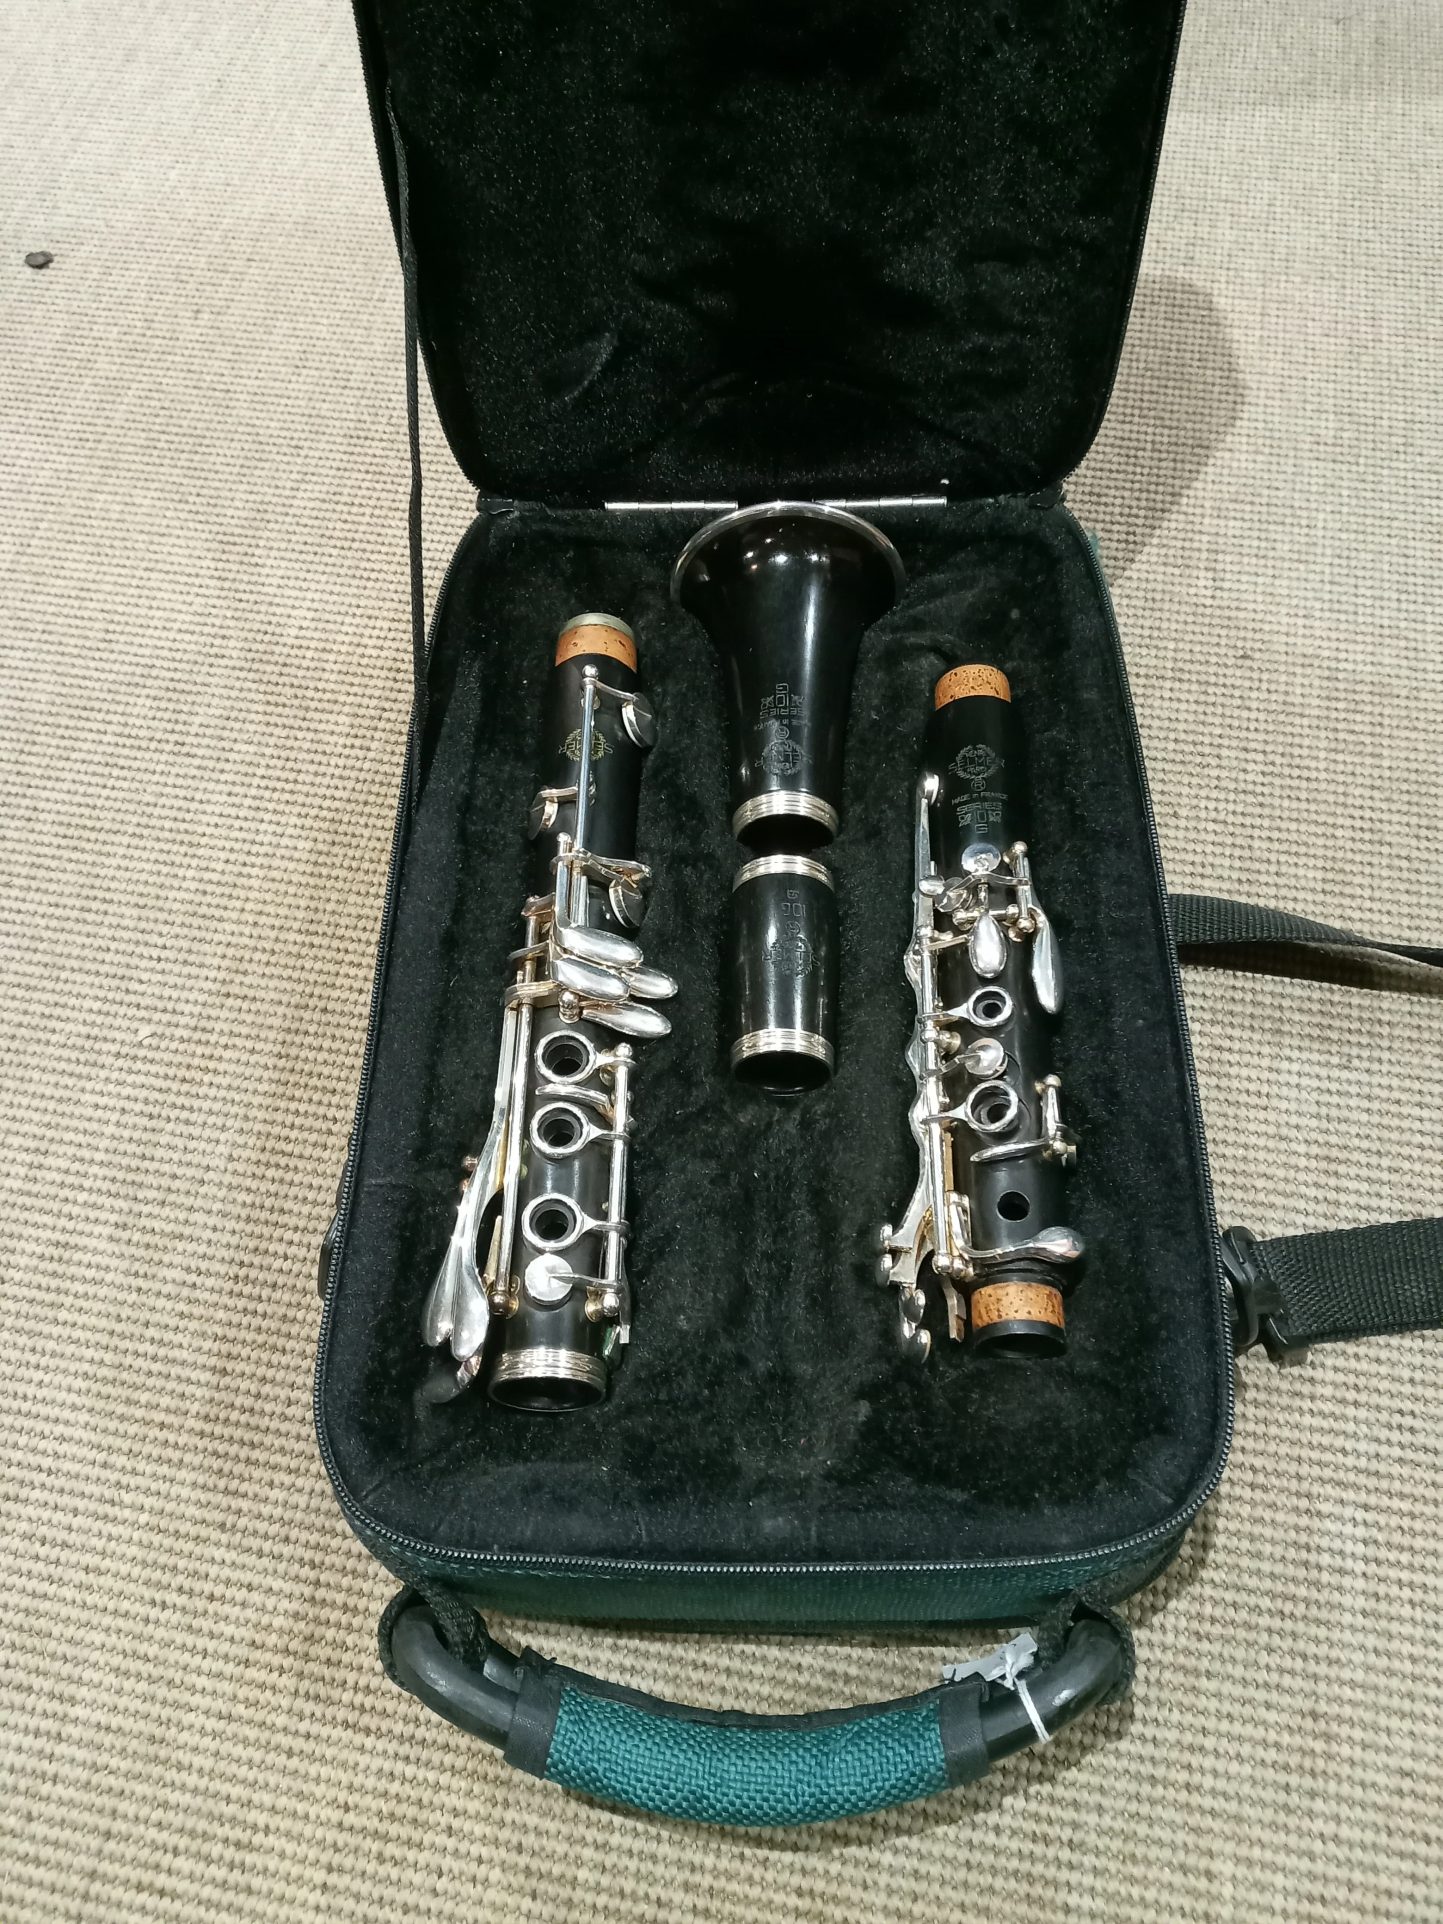 10 G Bb clarinet